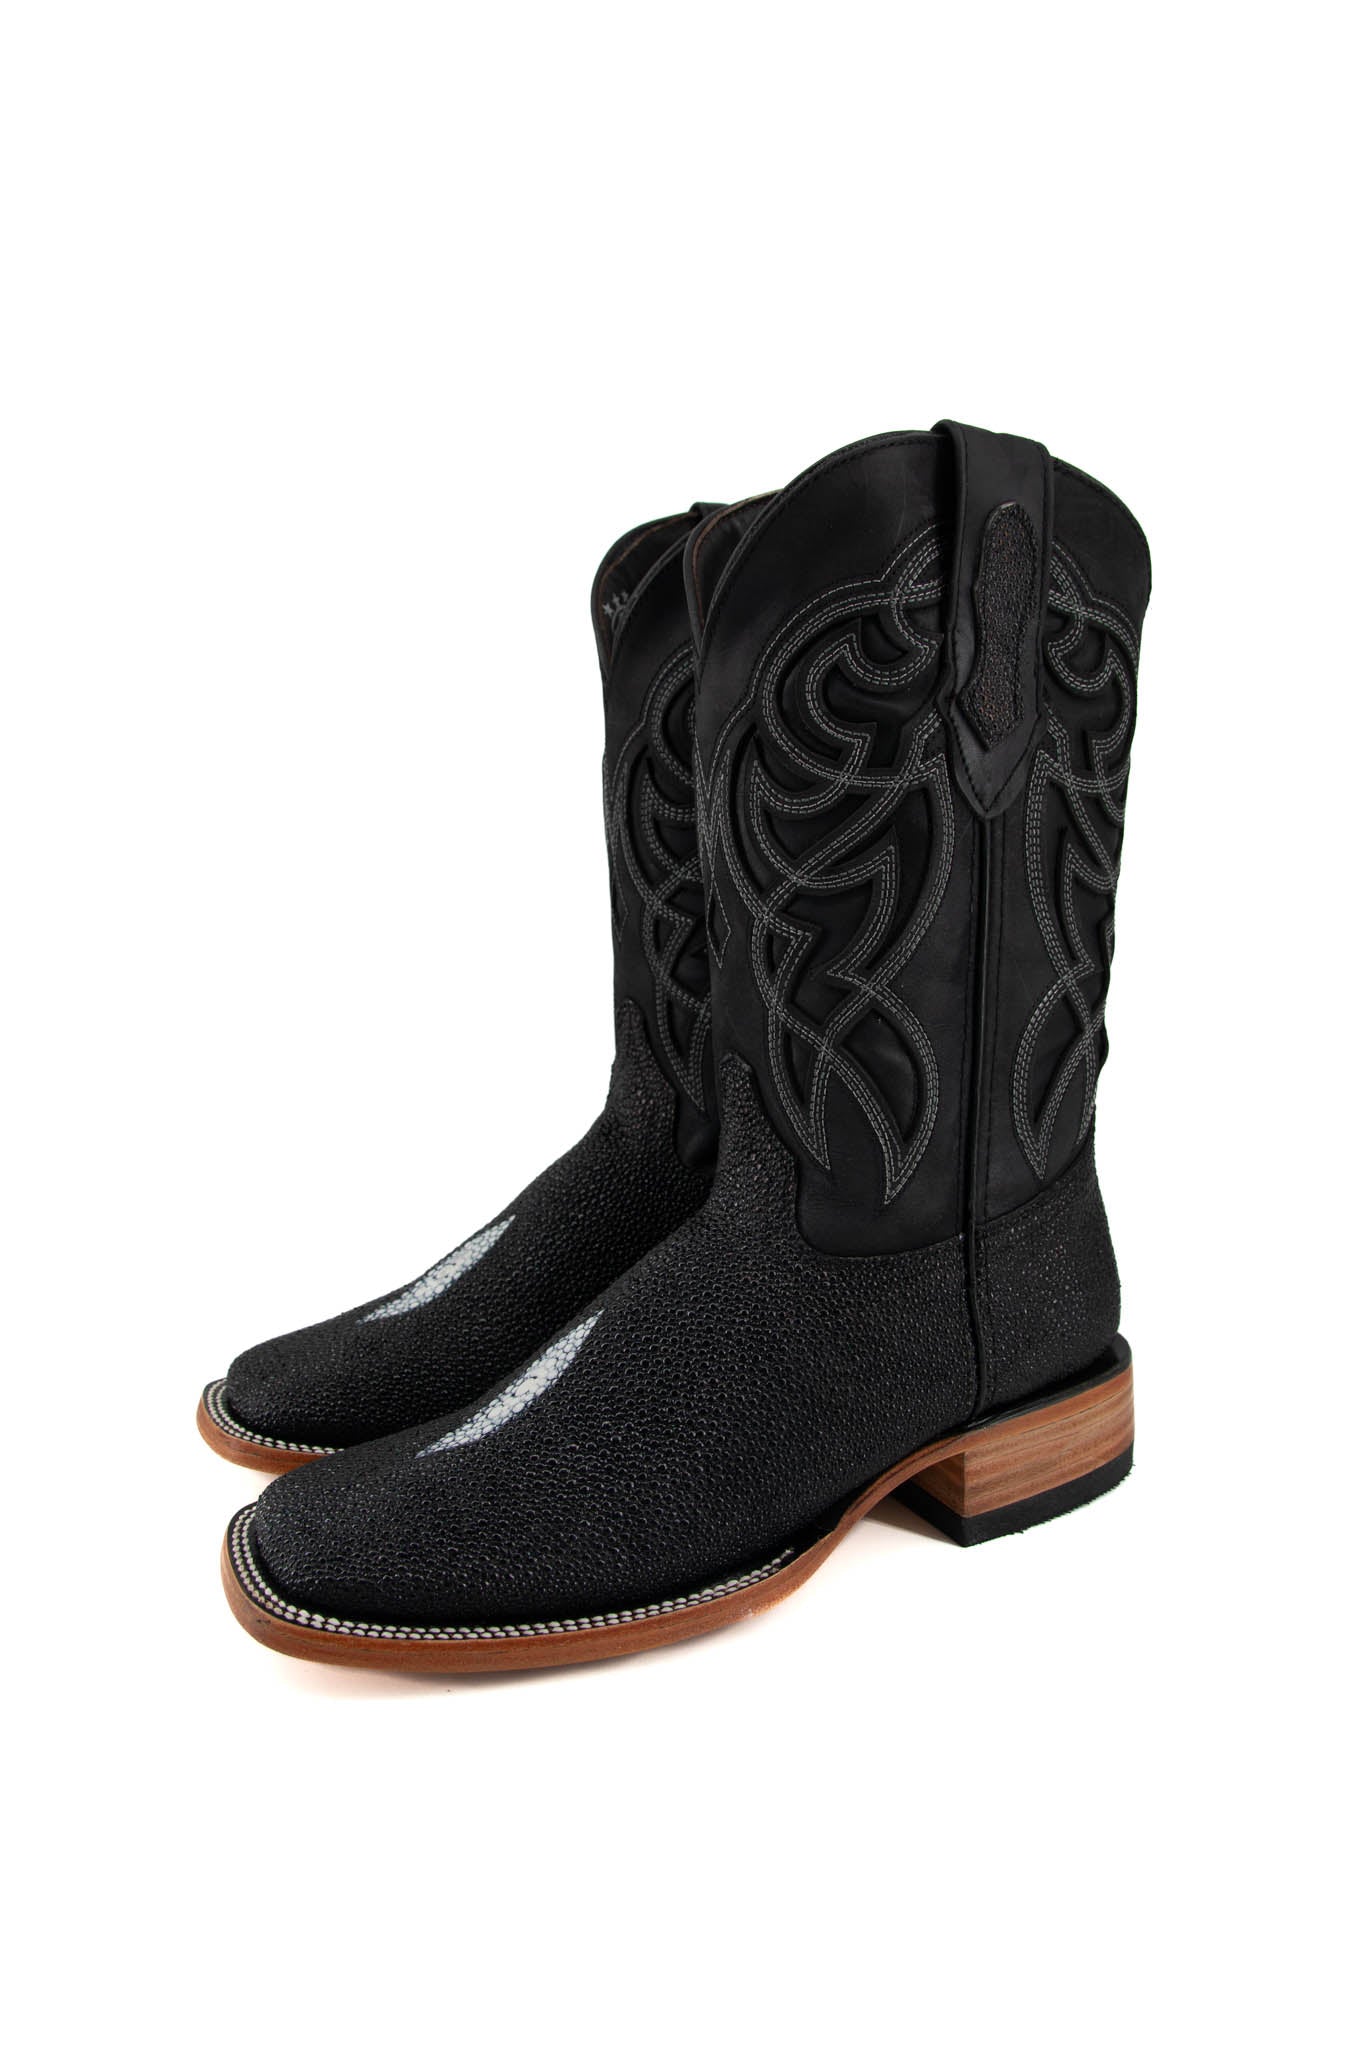 Stingray Black Square Toe Cowboy Boot